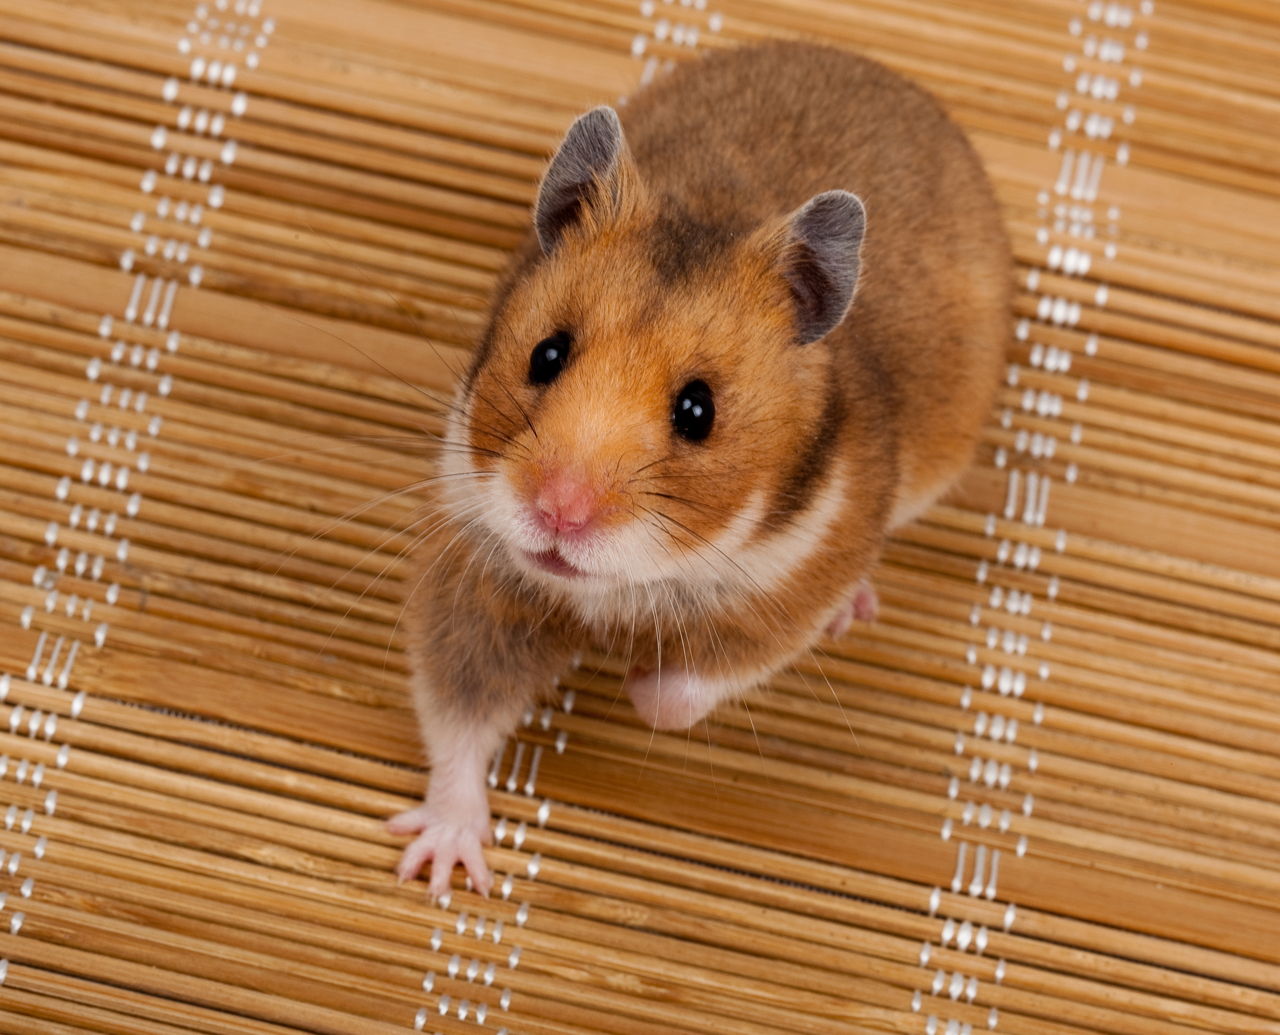 Mein Hamster hat immer volle Backen | nagerguide.de